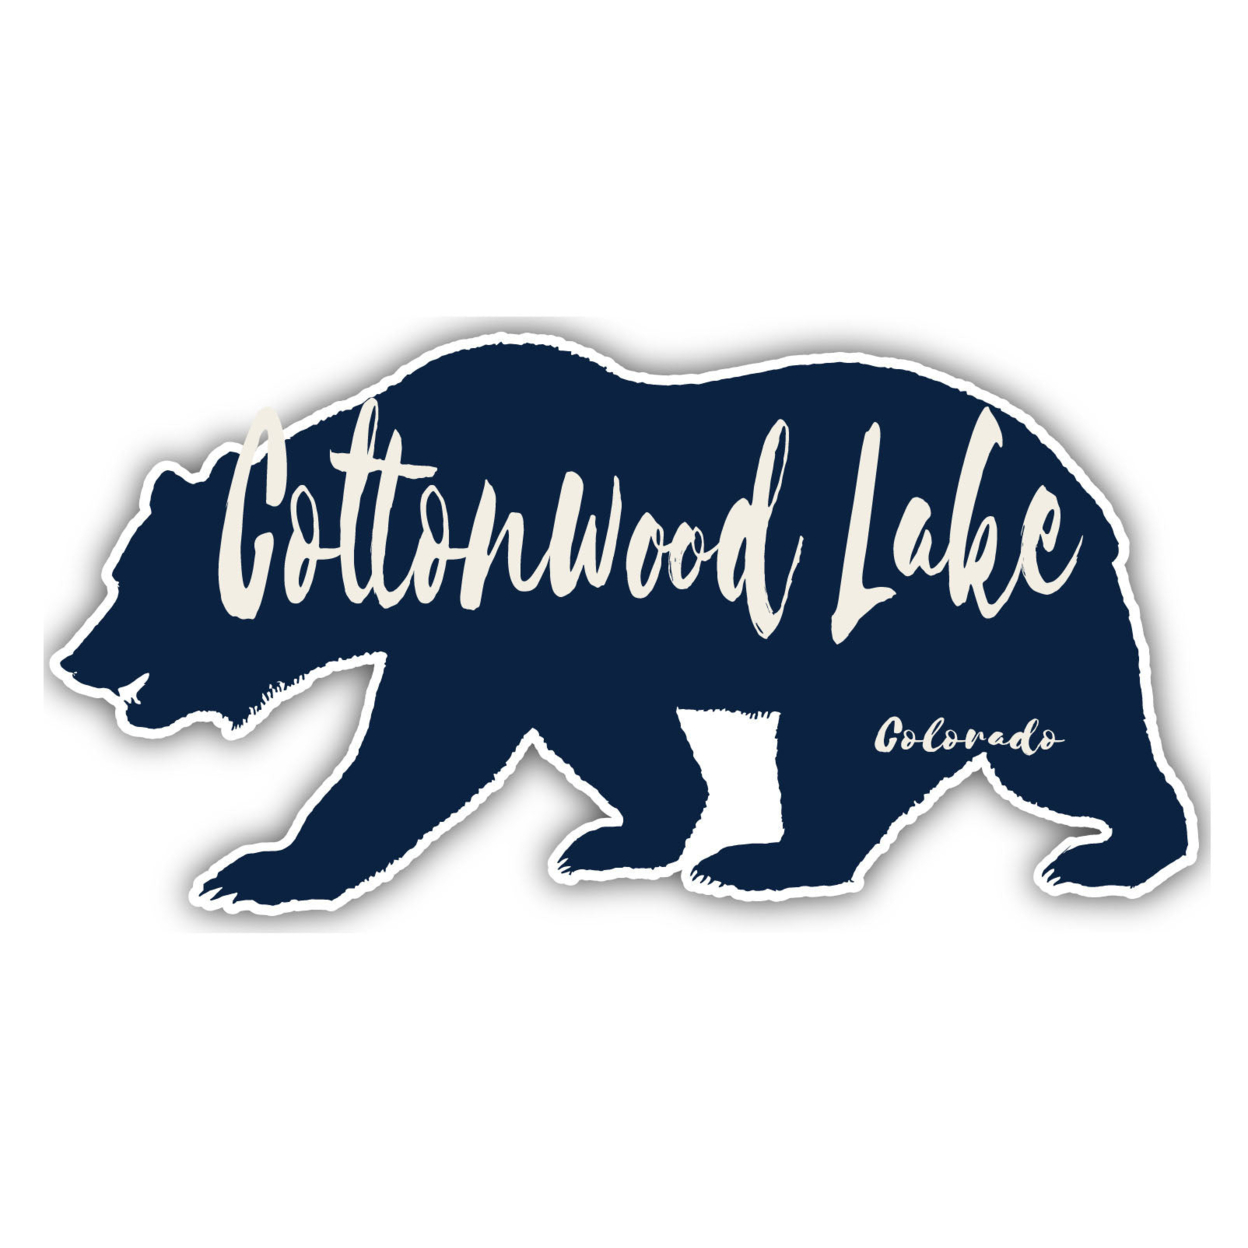 Cottonwood Lake Colorado Souvenir Decorative Stickers (Choose Theme And Size) - Single Unit, 6-Inch, Tent